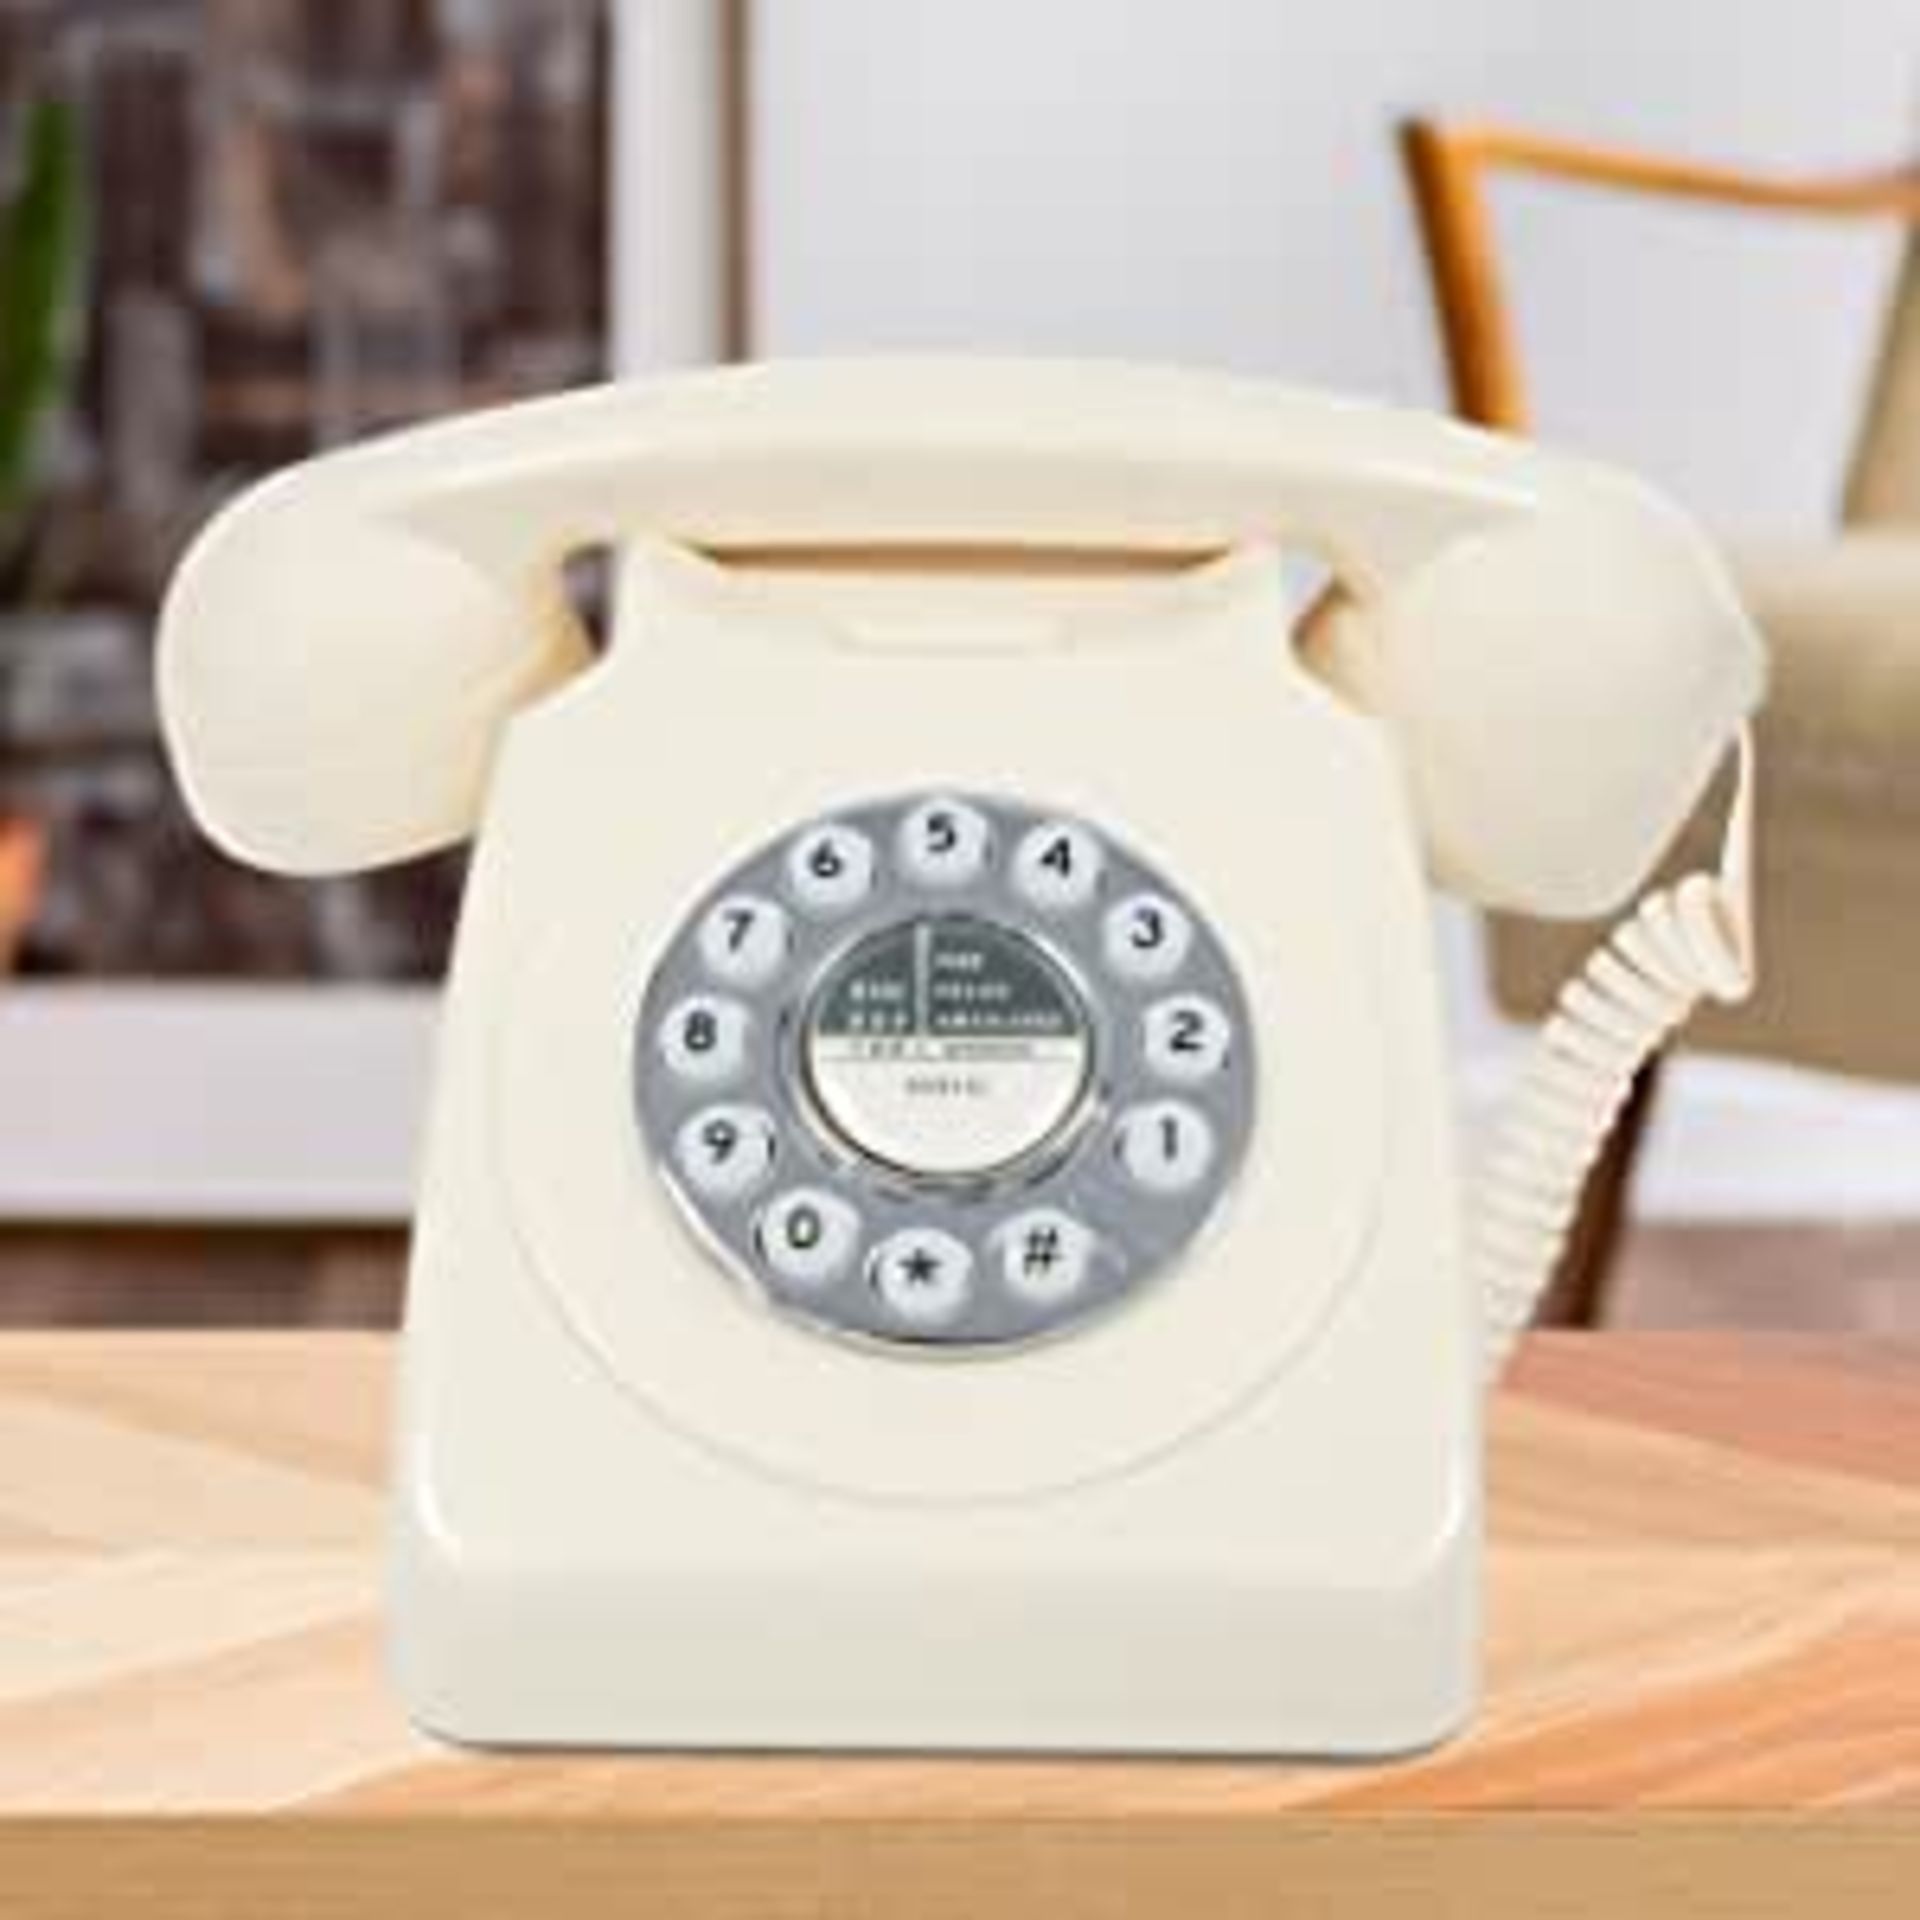 Benross 44530 Classic Retro Telephone / Vintage Style Corded Phone / Classic Ringer Sound / Push